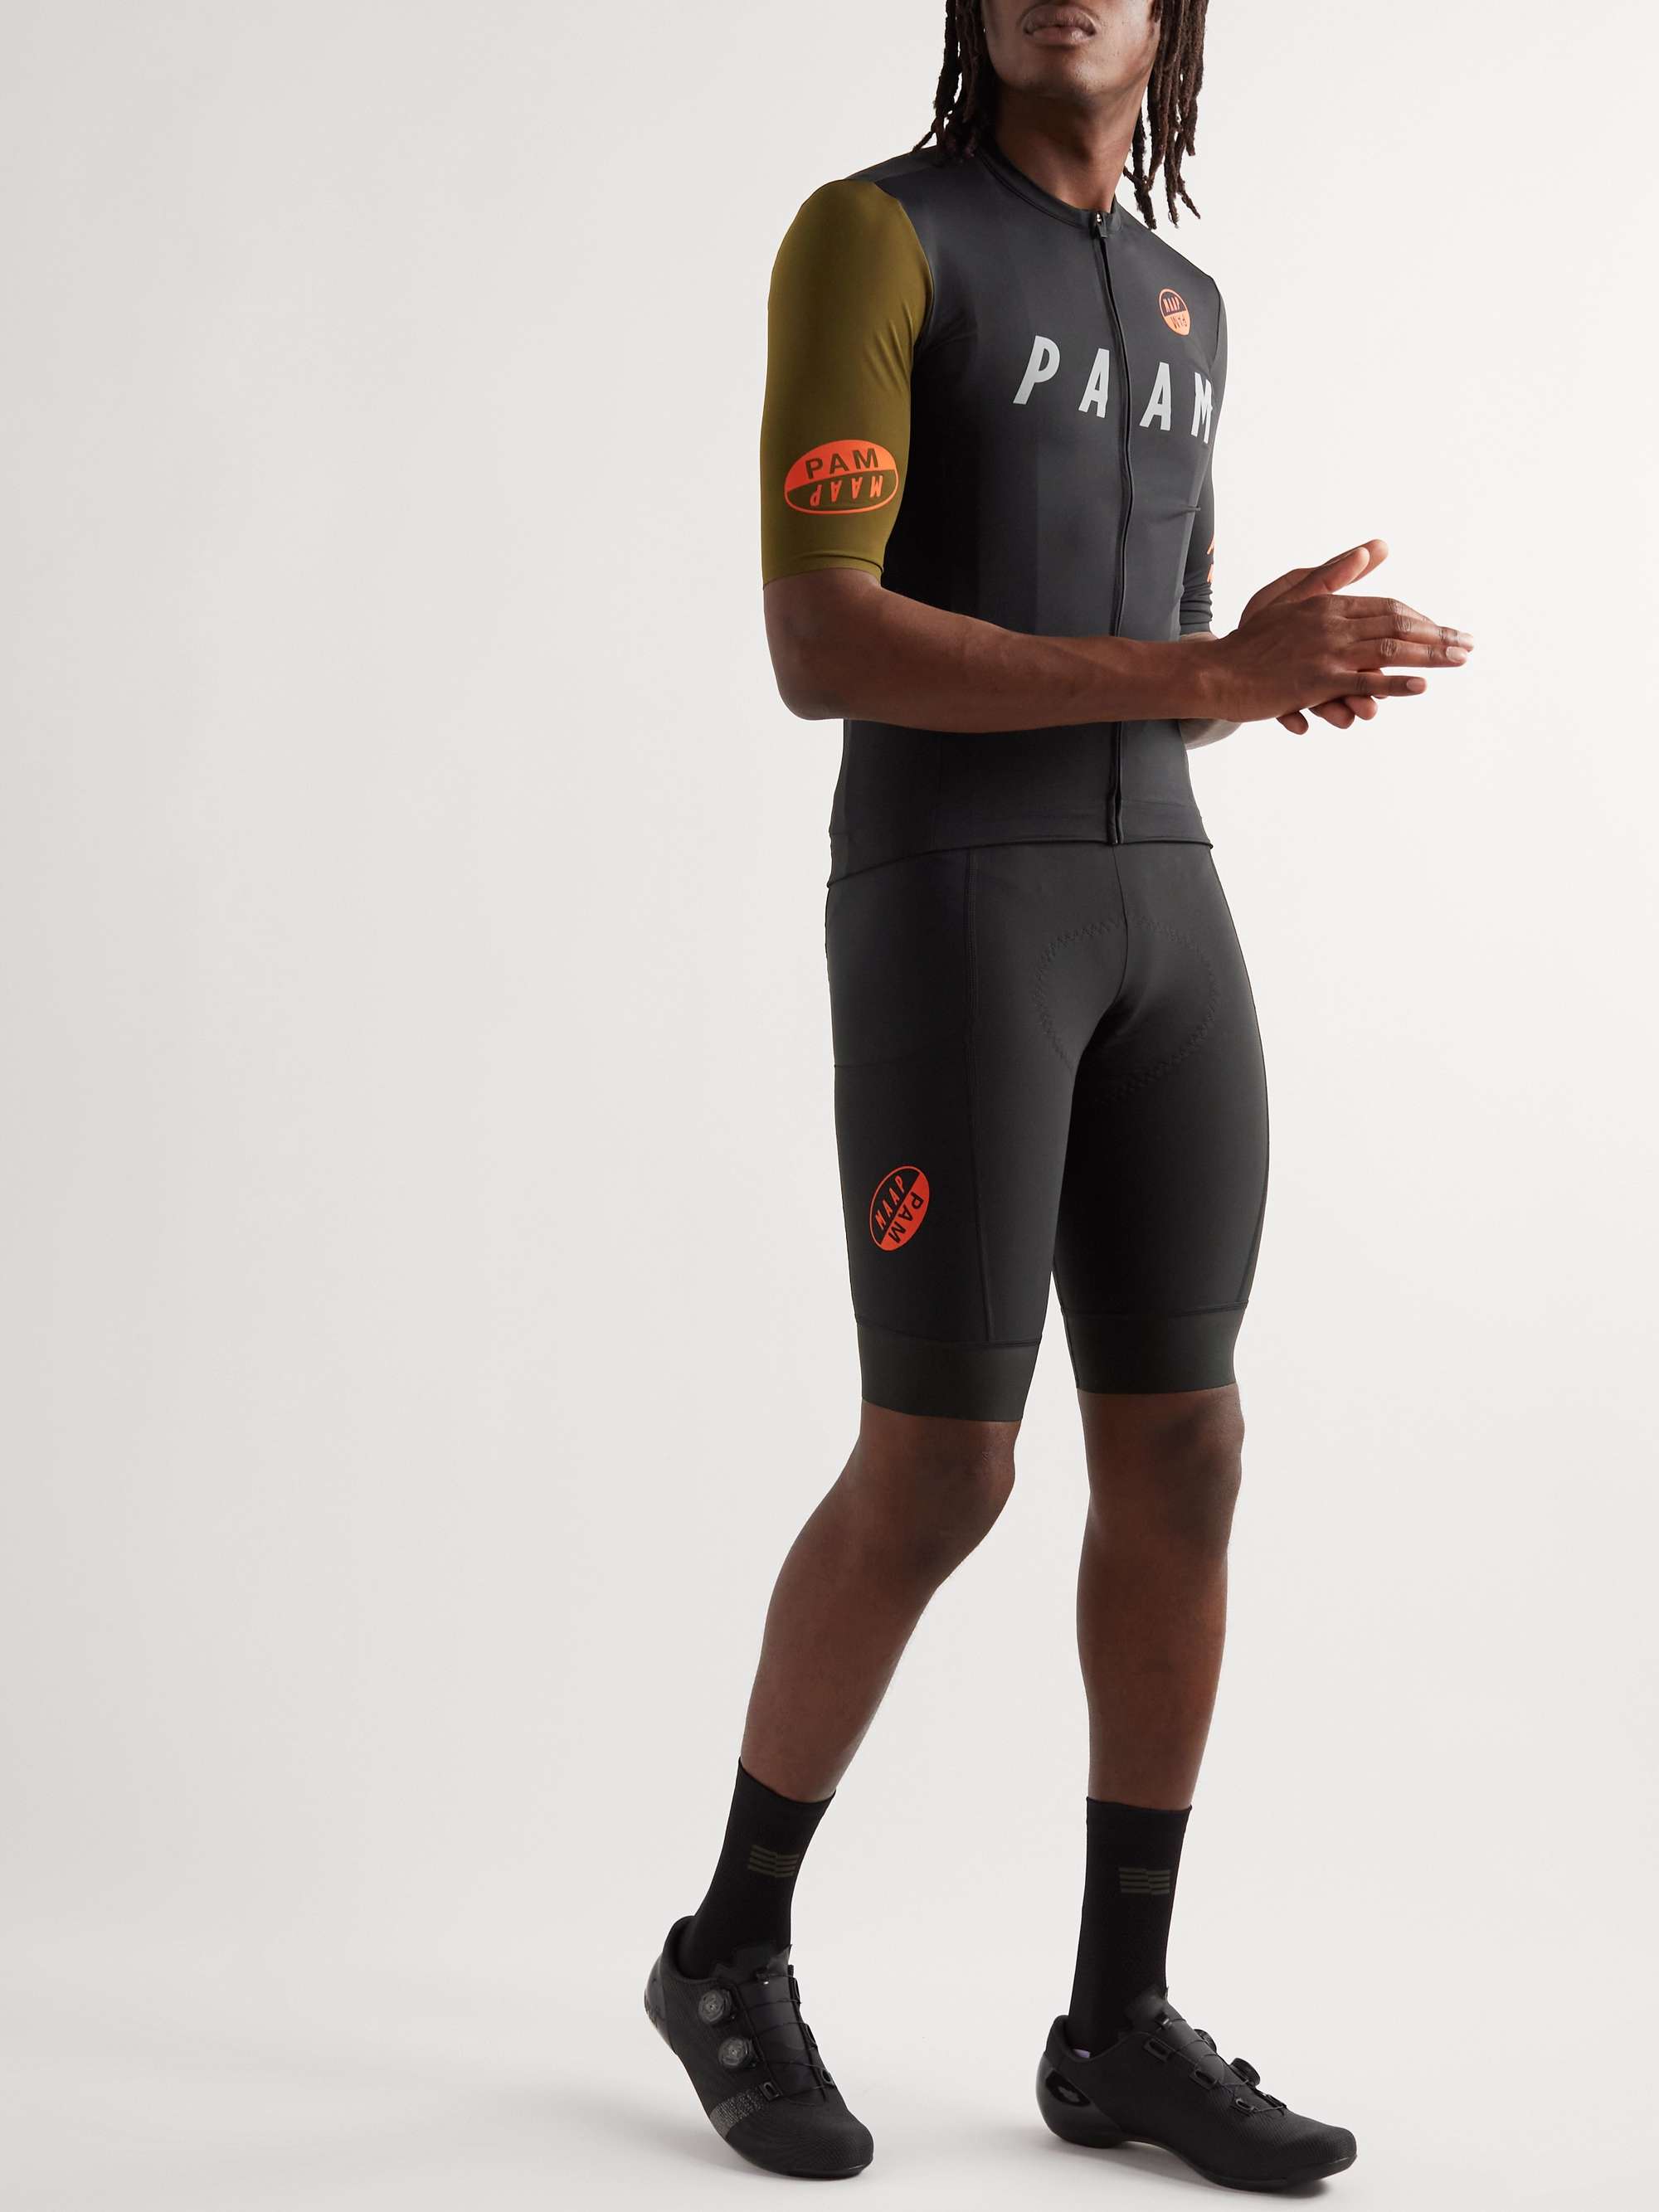 MAAP + P.A.M. Team Logo-Print Cycling Jersey